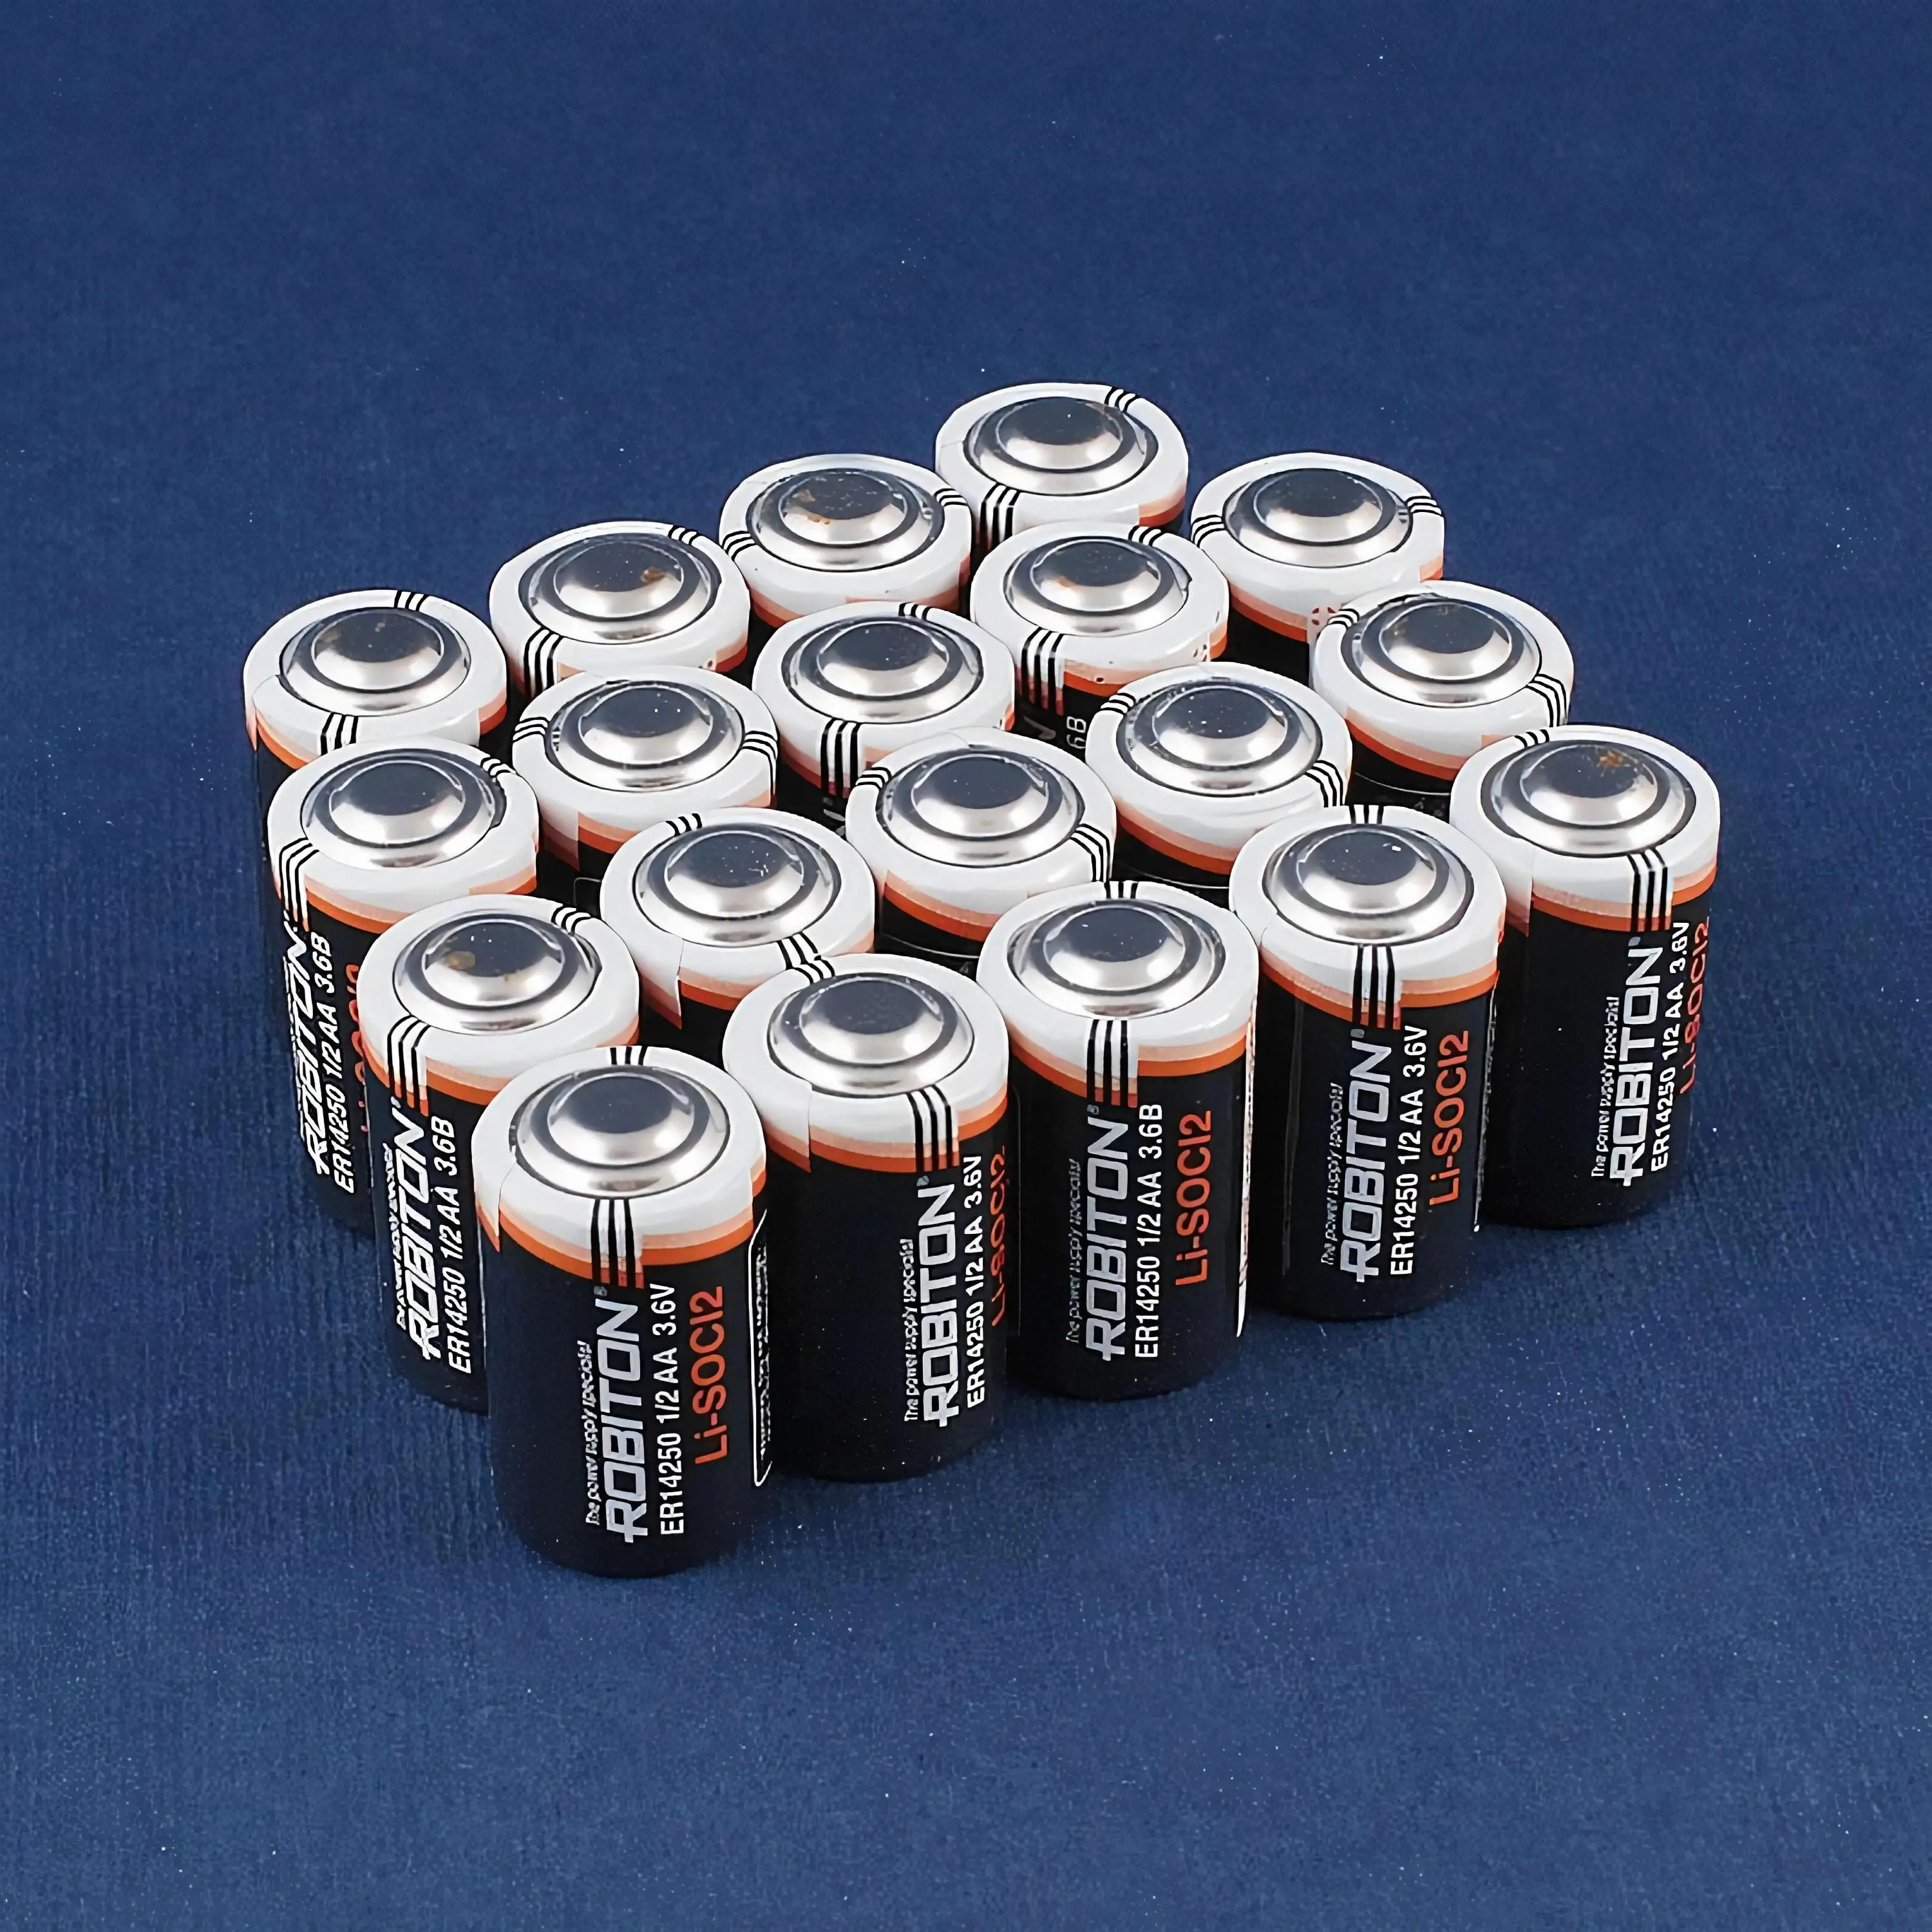 Battery type. Батарейка er14250 3.6v Size 1/2 AA. Батарейки 2аа и 3аа. Батарейка 1/2 AA ДНС. 2aa батарейка.